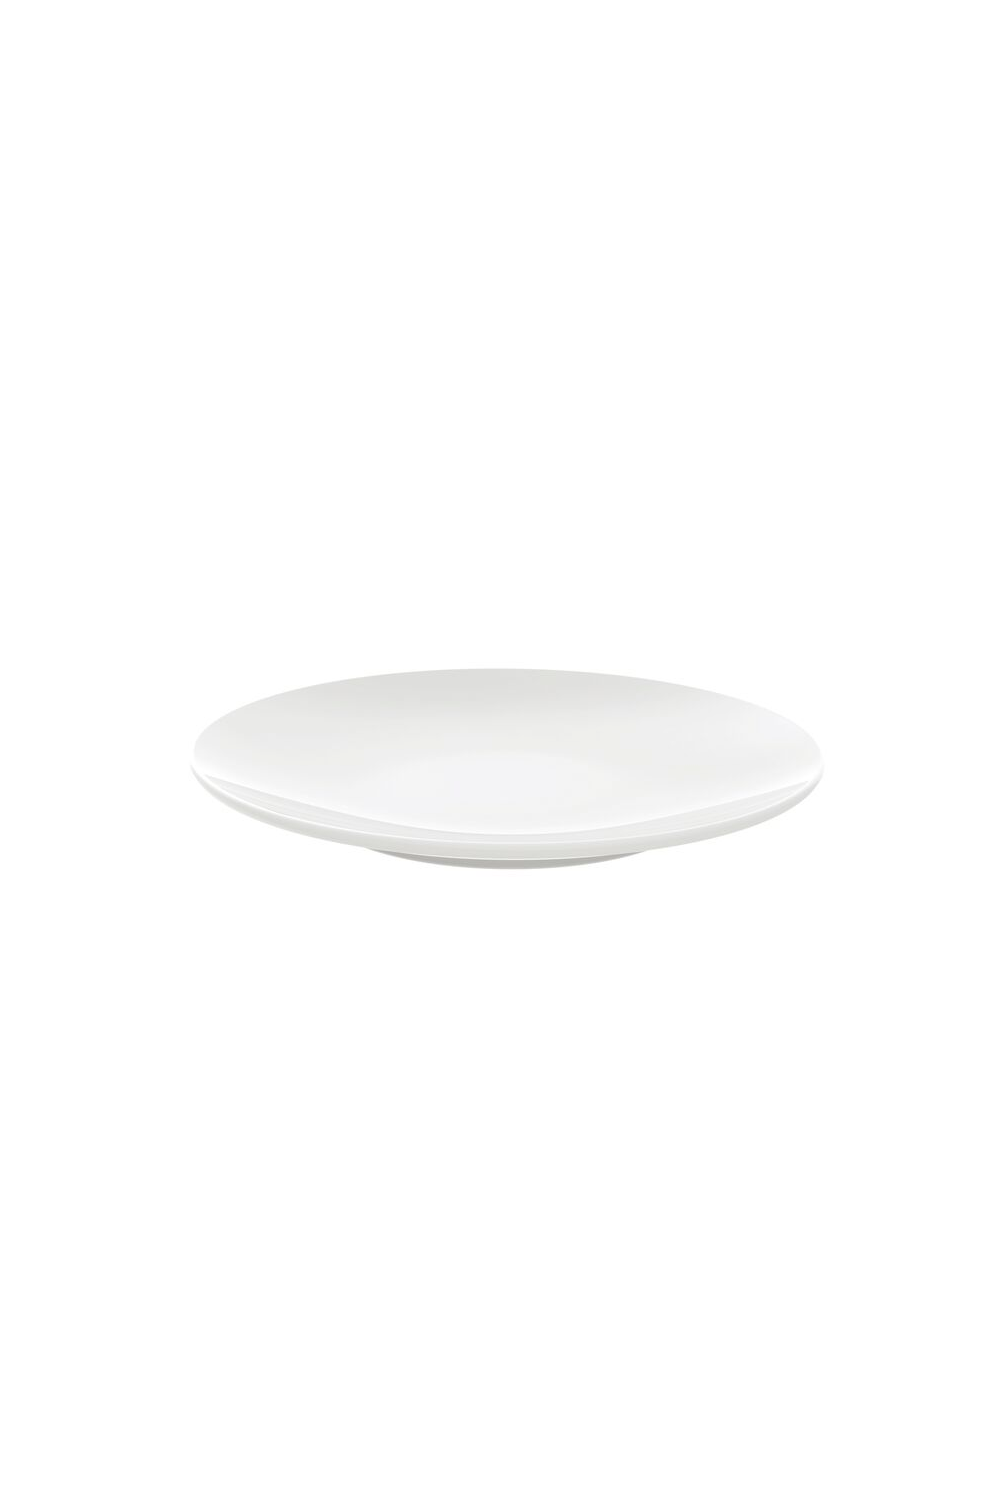 prato-de-porcelana-prato-de-porcelana-sobremesa-aba-larga-21cm-hsaba-larga-21cm